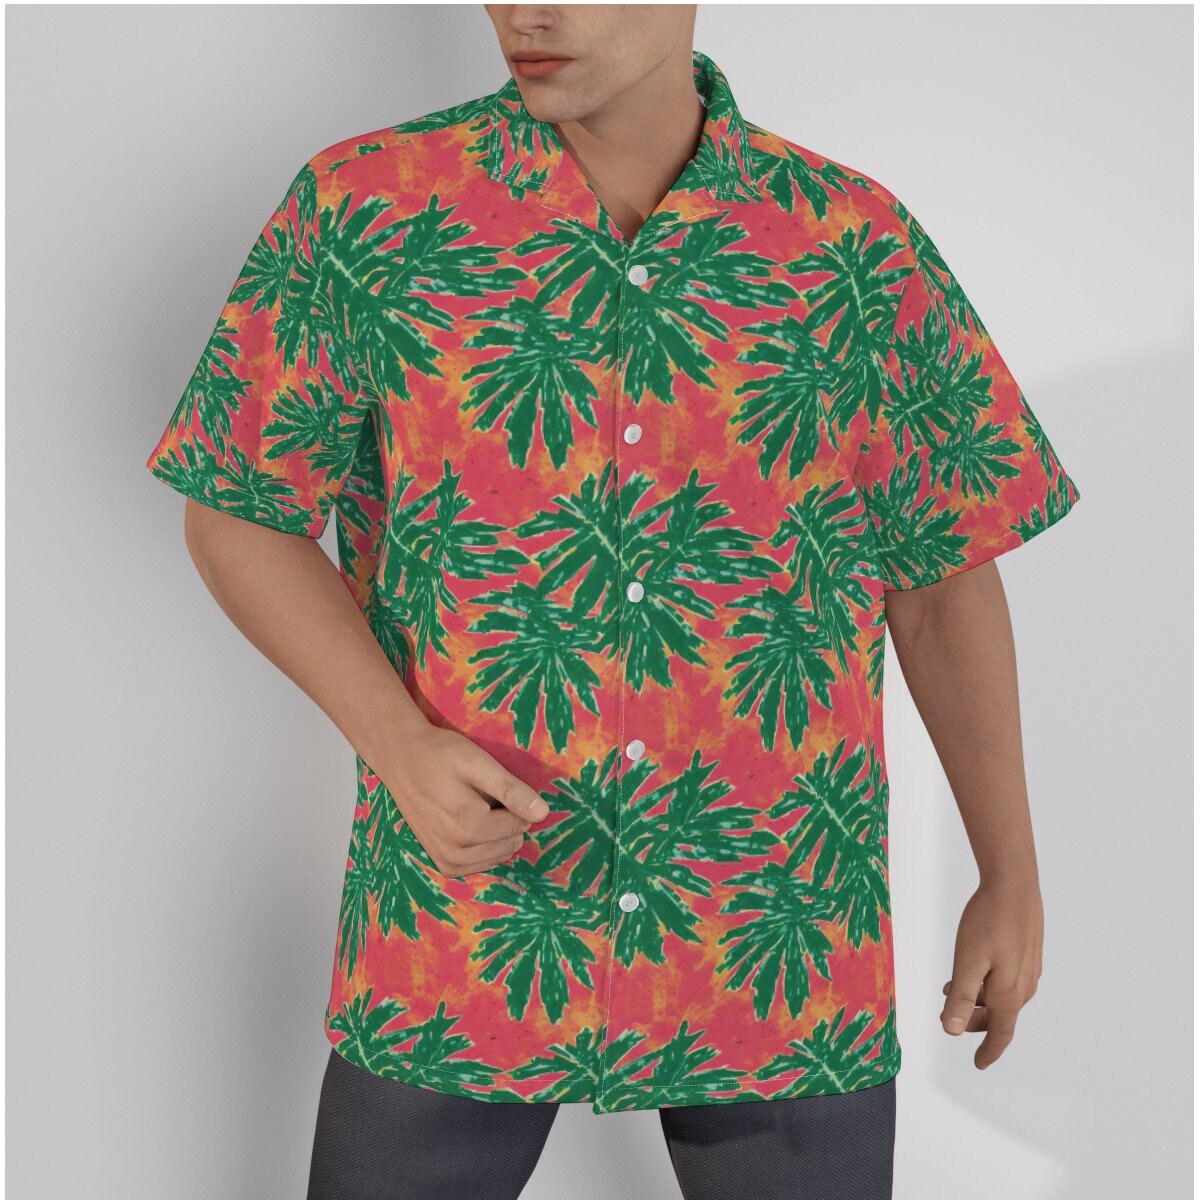 The Tomato Palm Tropical Men's Hawaiian Shirt